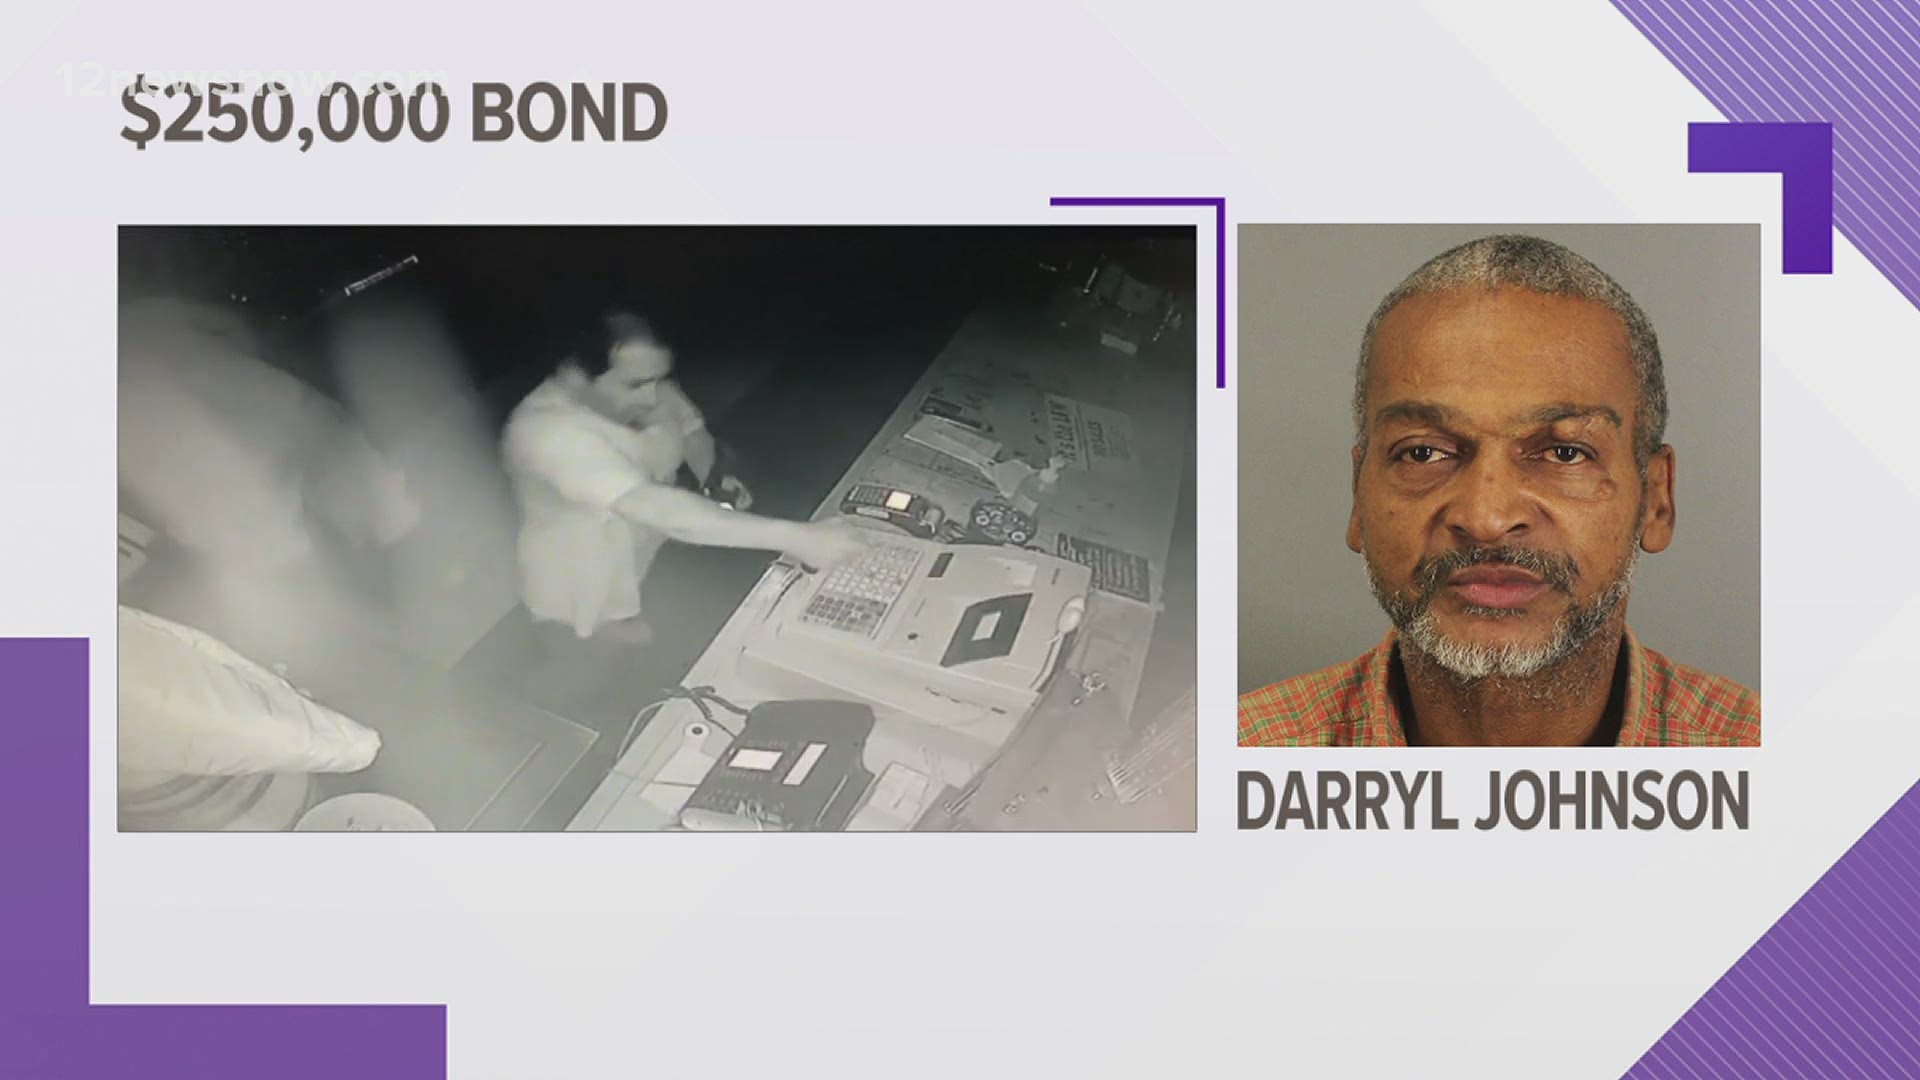 Darryl Johnson was arrested on Monday